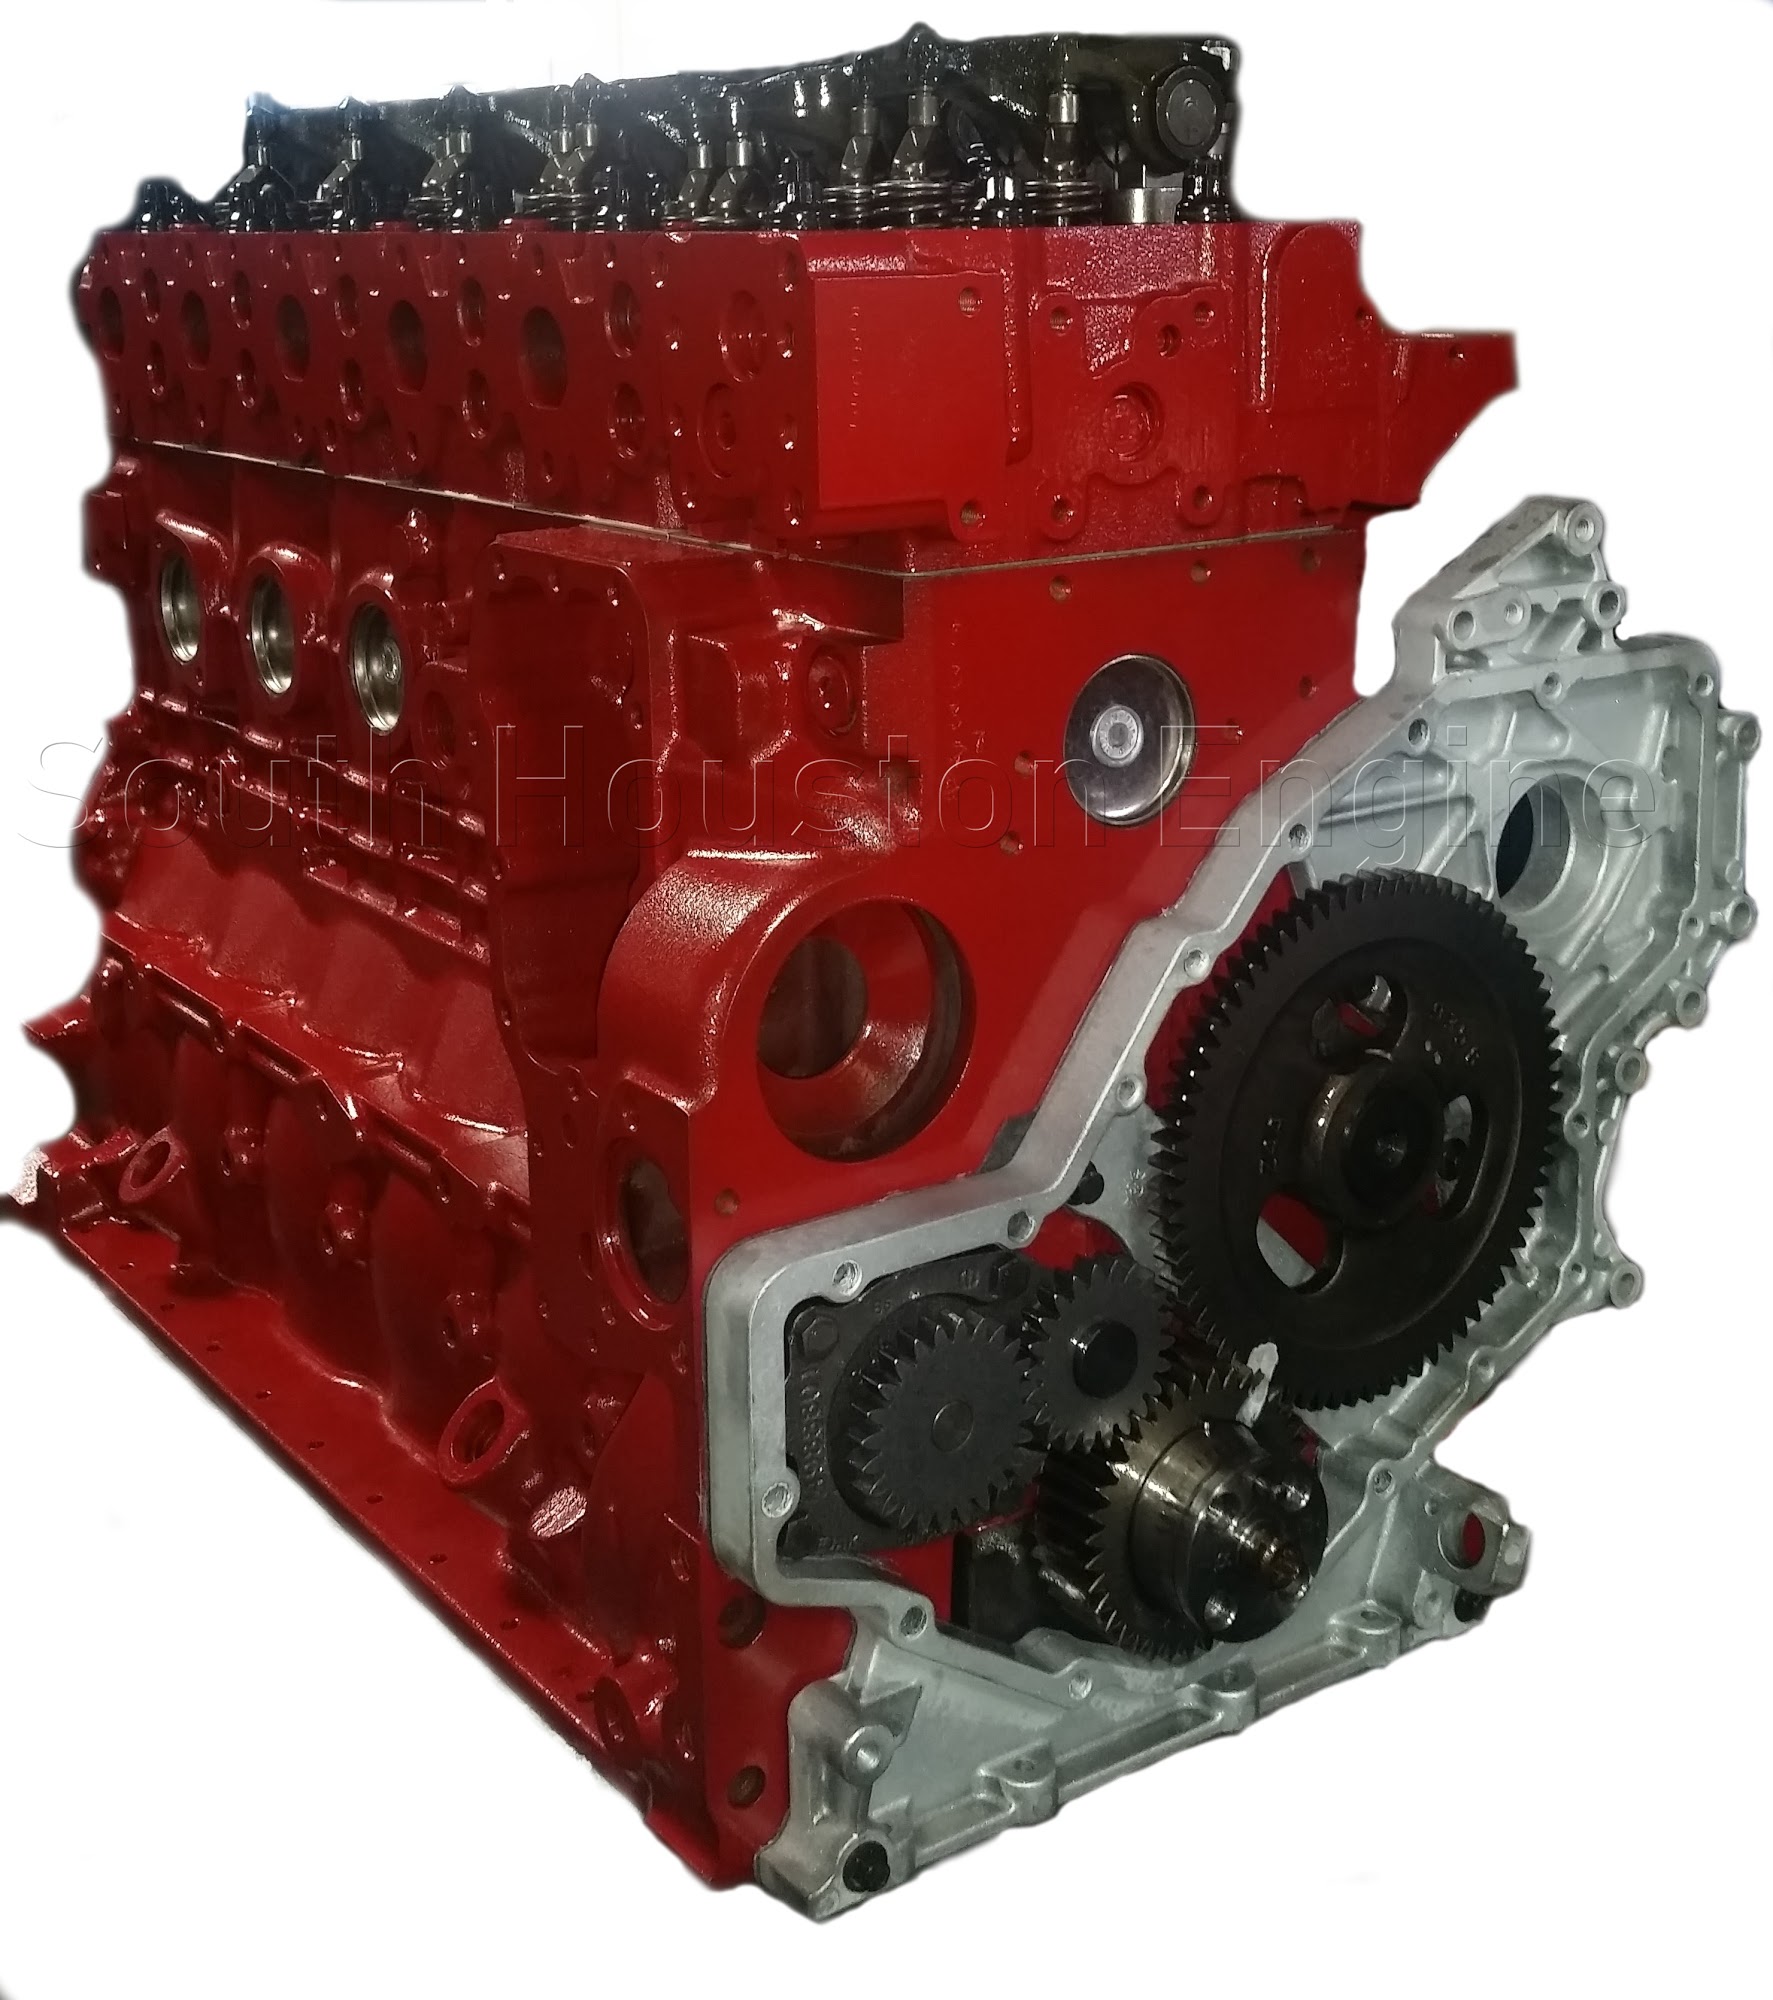 South Houston Engine